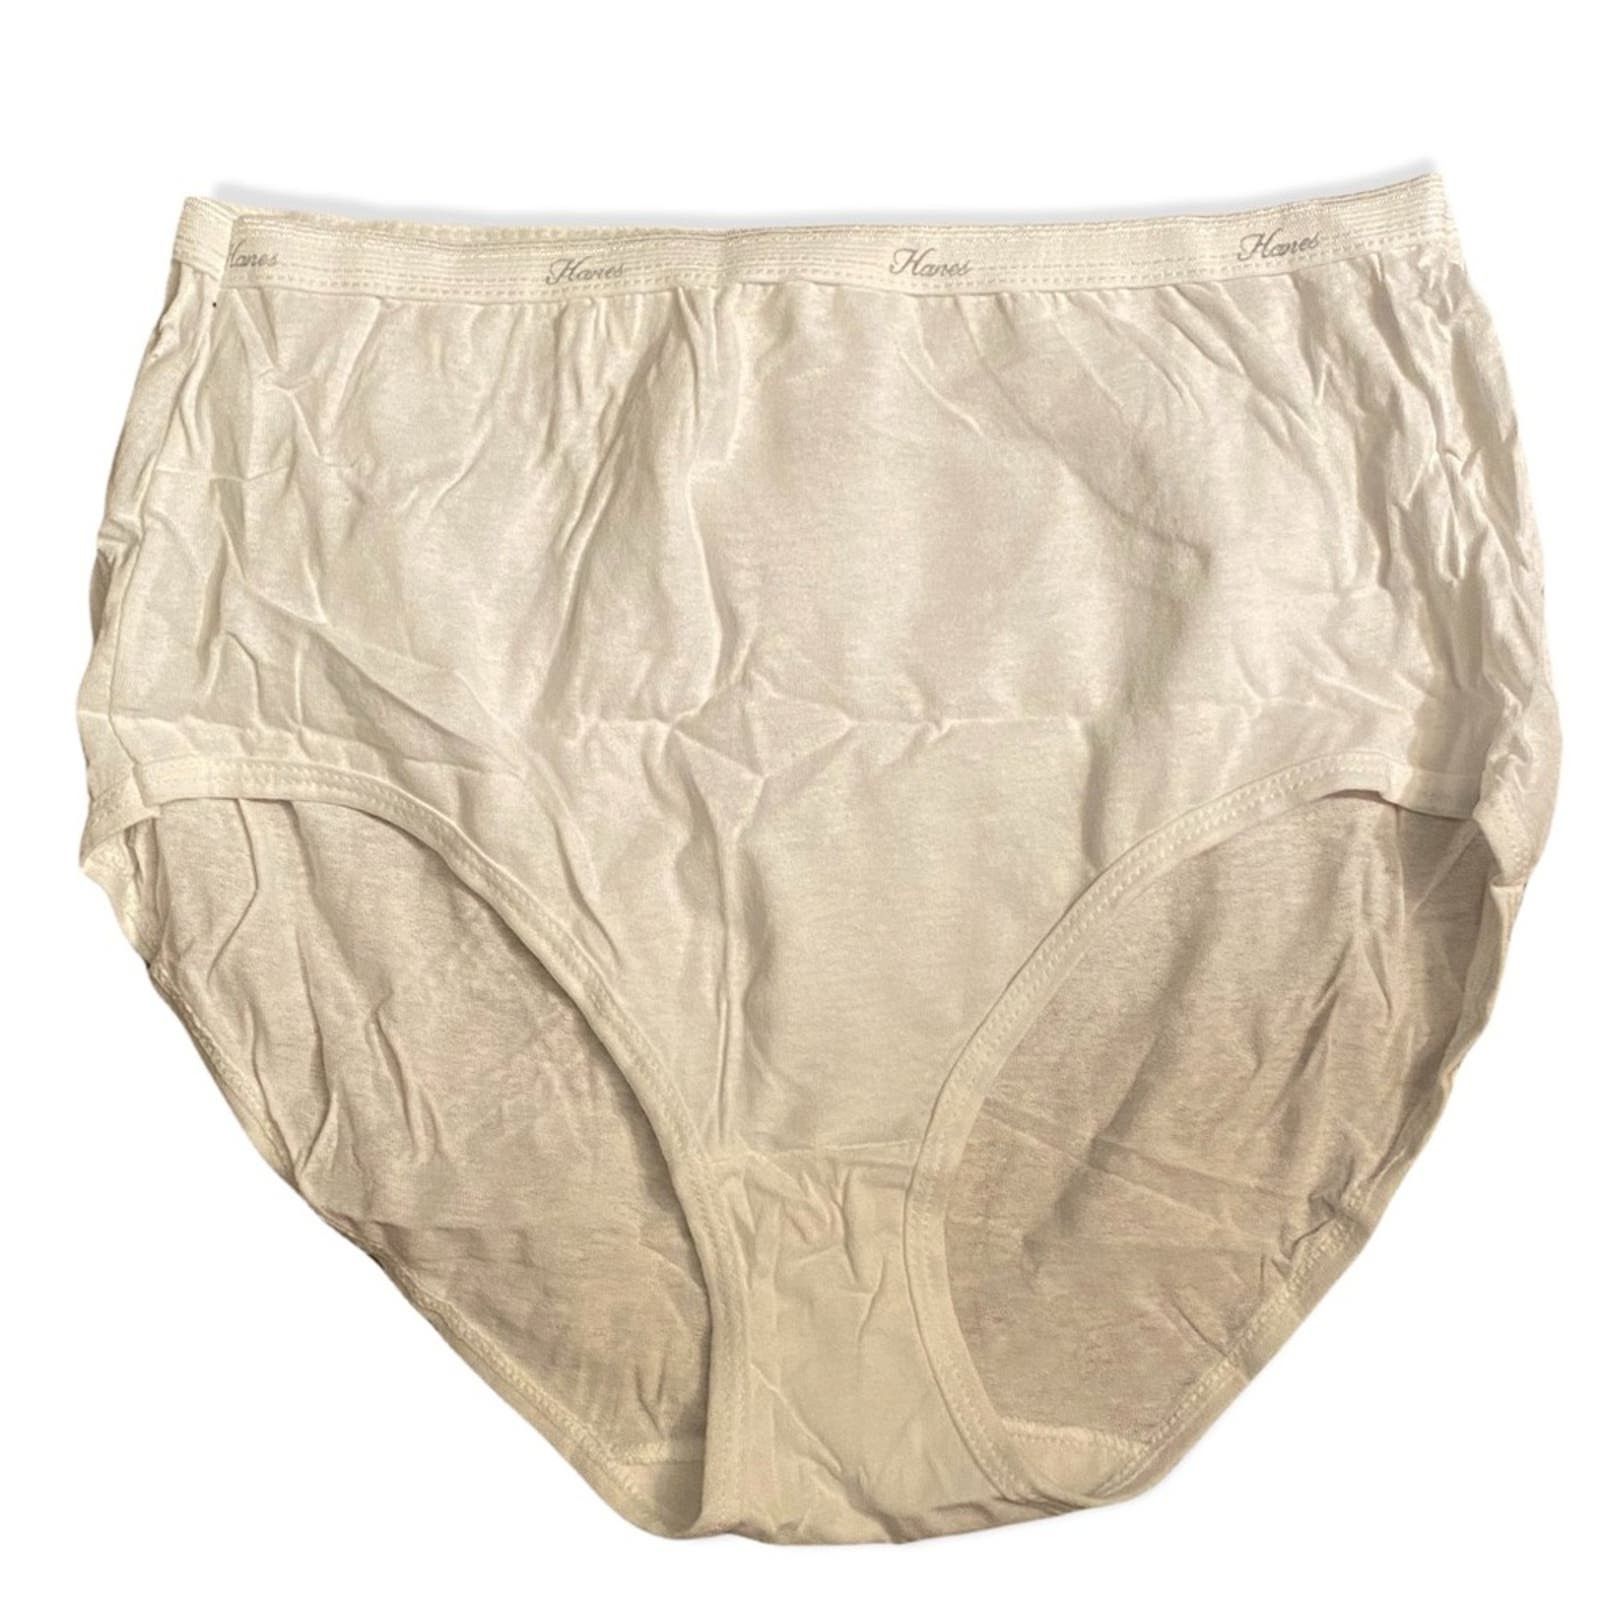 Hanes Hanes White 8 Pairs Cotton Underwear Size Large NEW